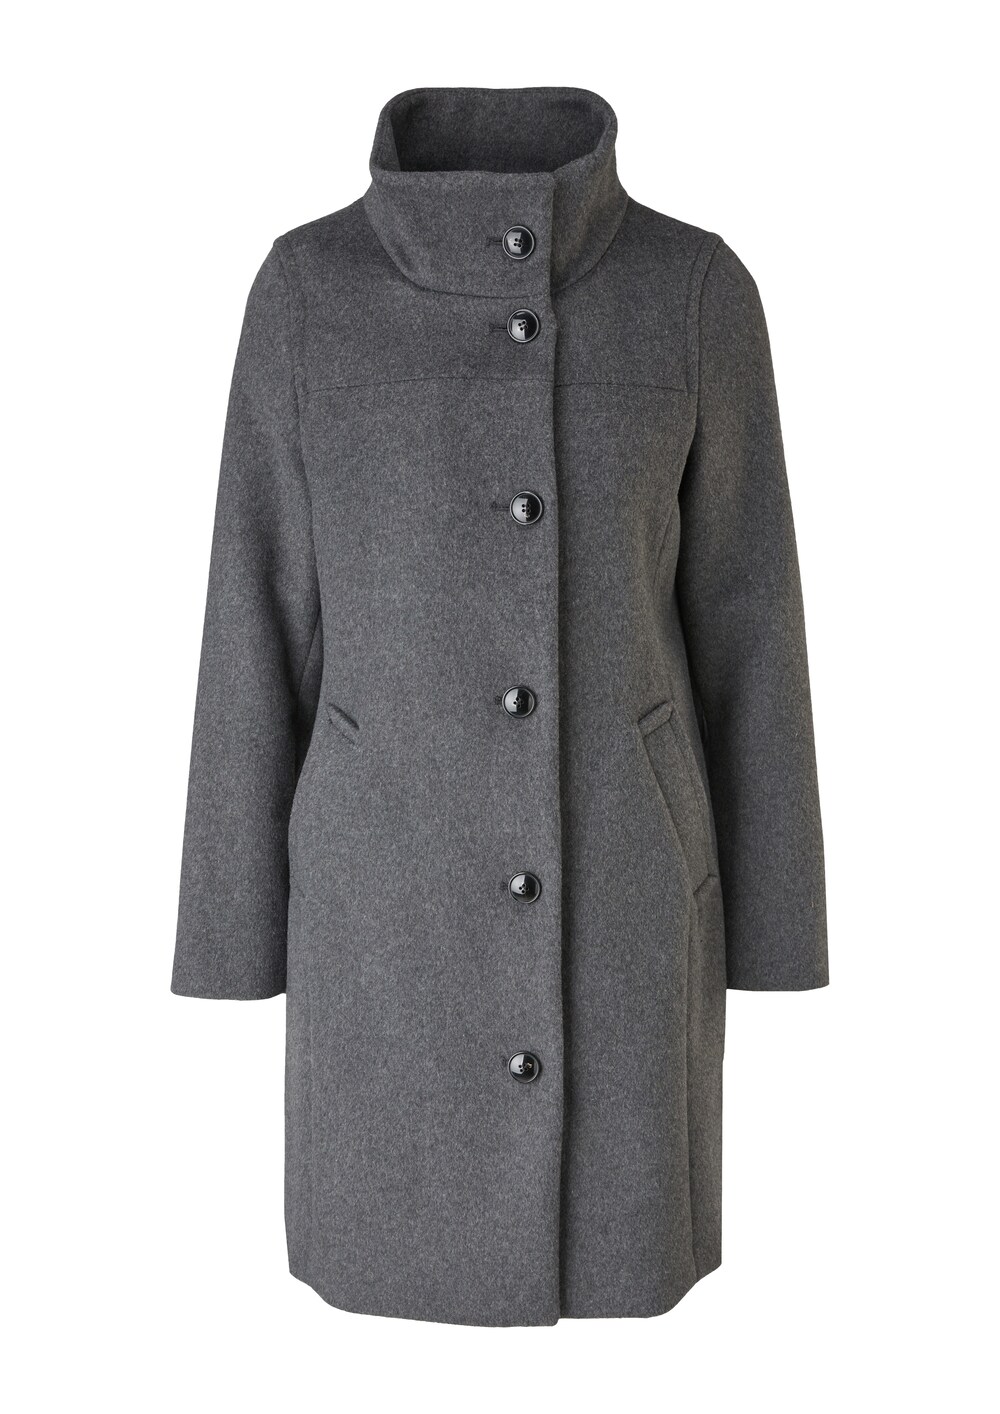 Межсезонное пальто S.Oliver, пестрый серый межсезонное пальто edited tosca пестрый серый